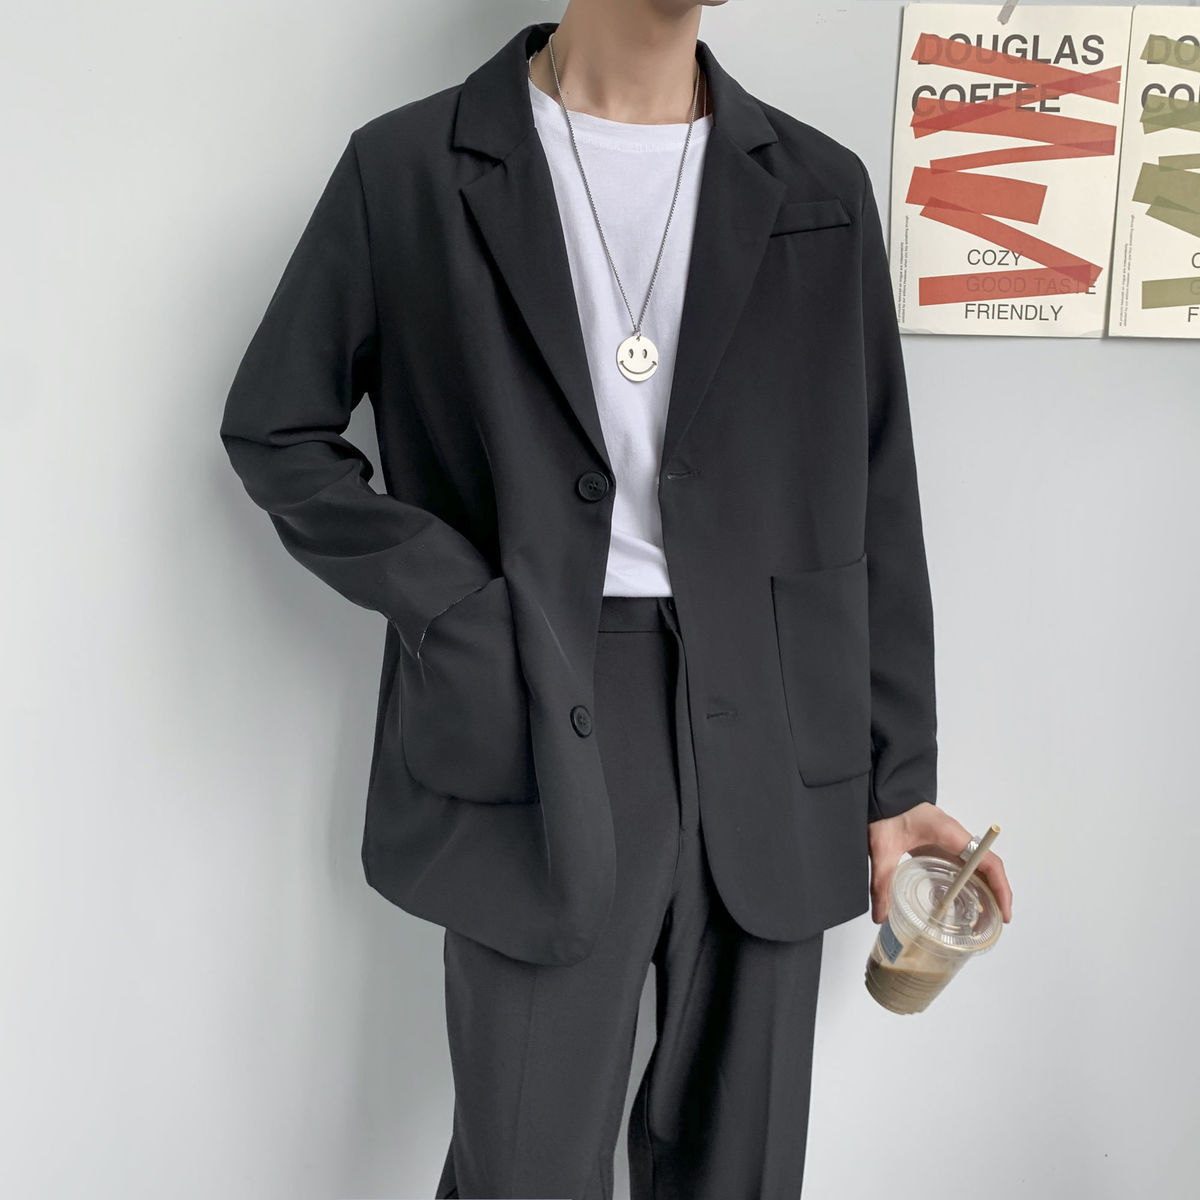 [Three-piece suit] 21 spring and autumn high-end suit men's suit ins ruffian handsome suit jacket Korean trend